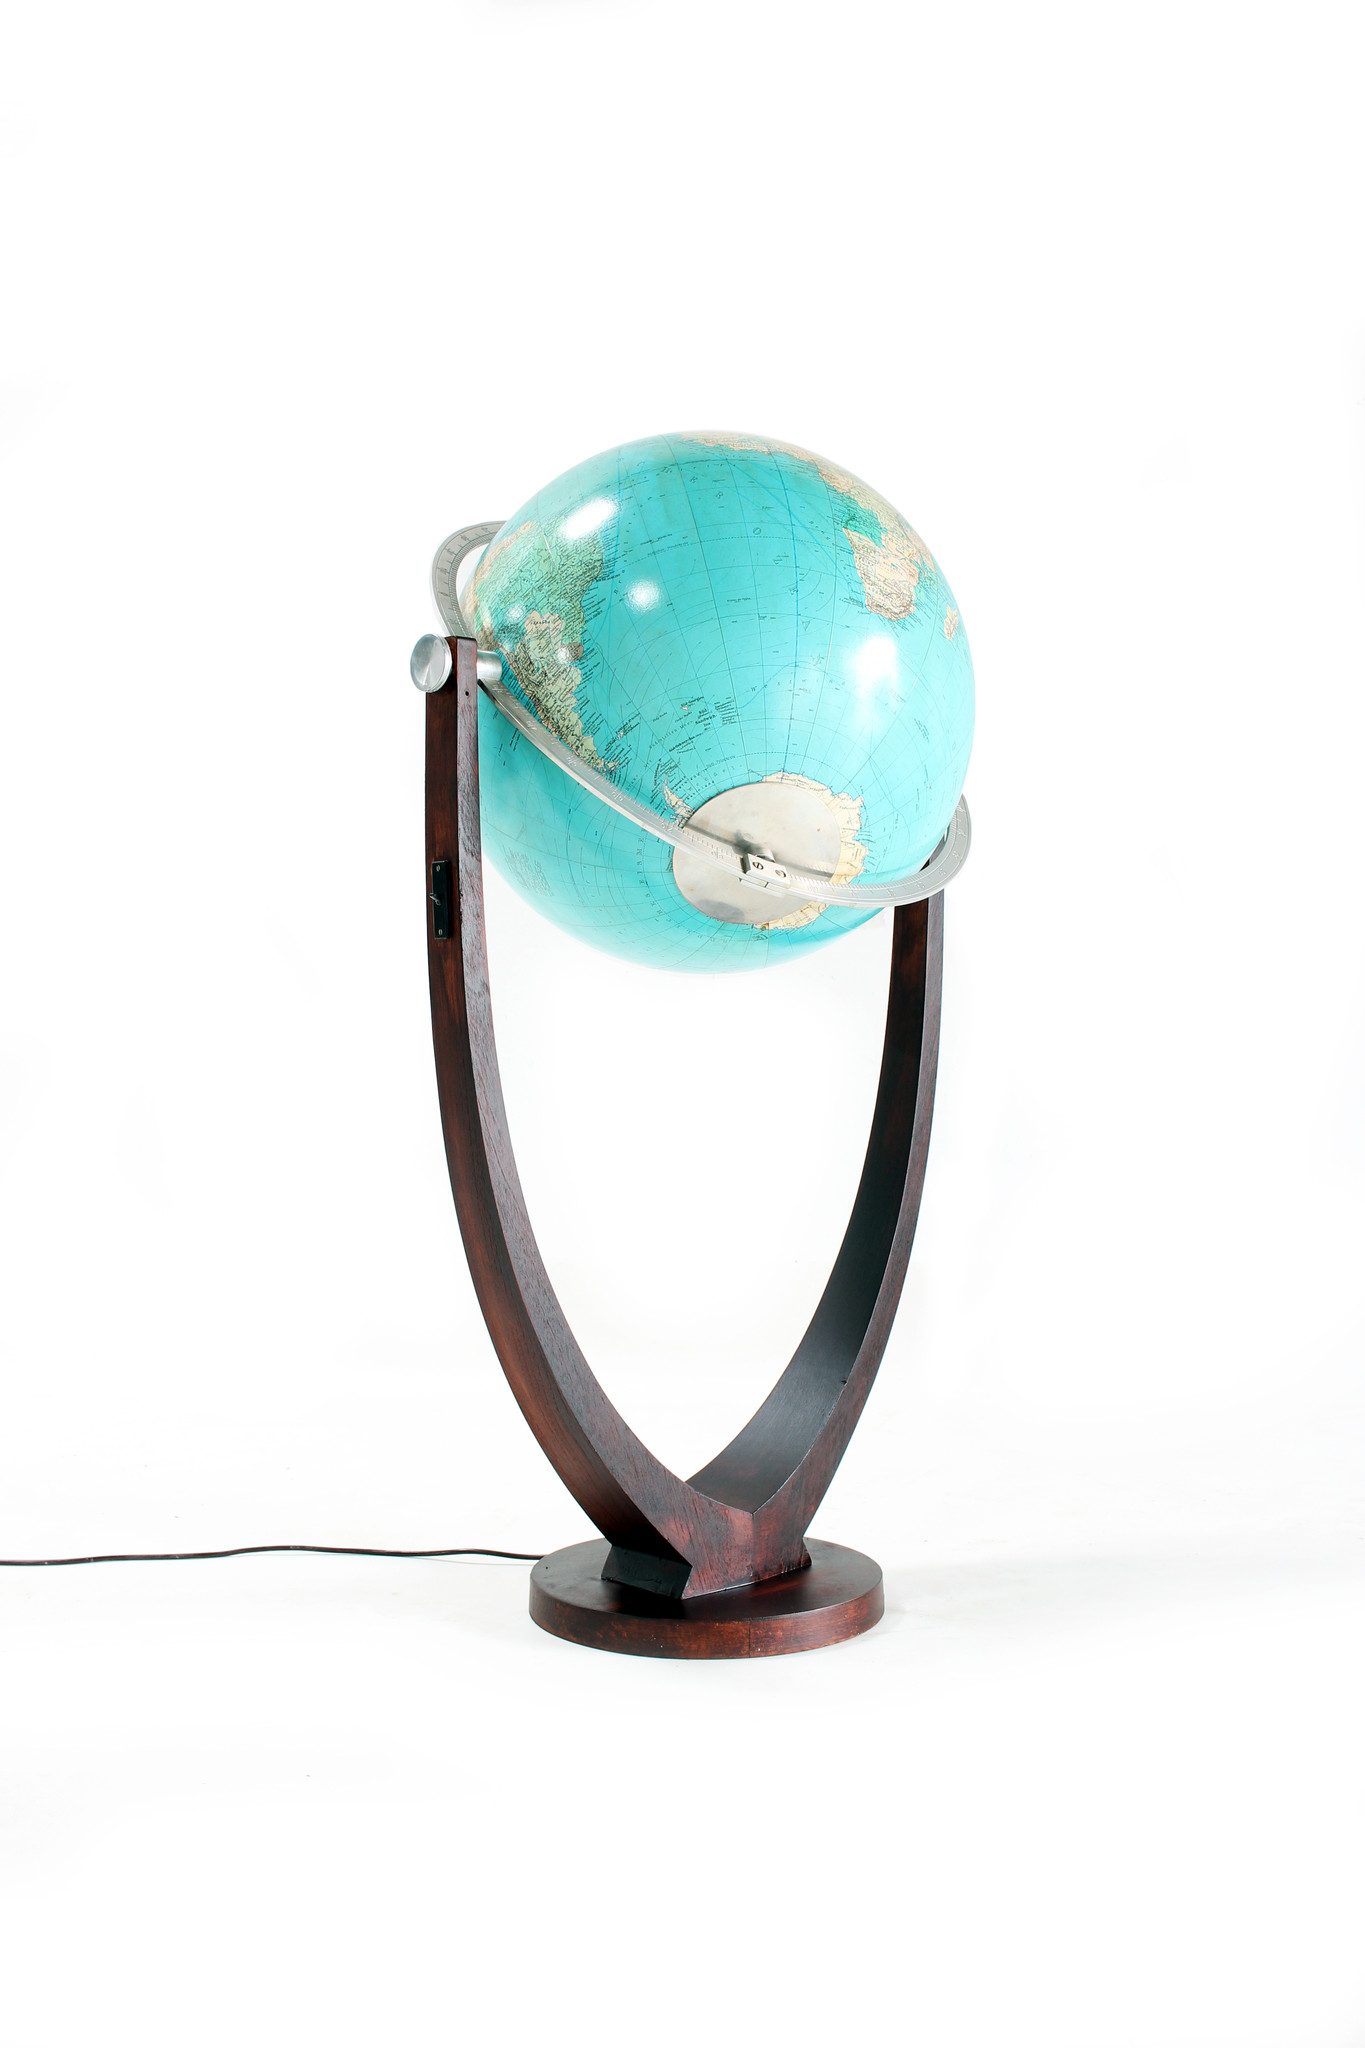 Columbus Globe designed by Paul Oestergaard, 1950s